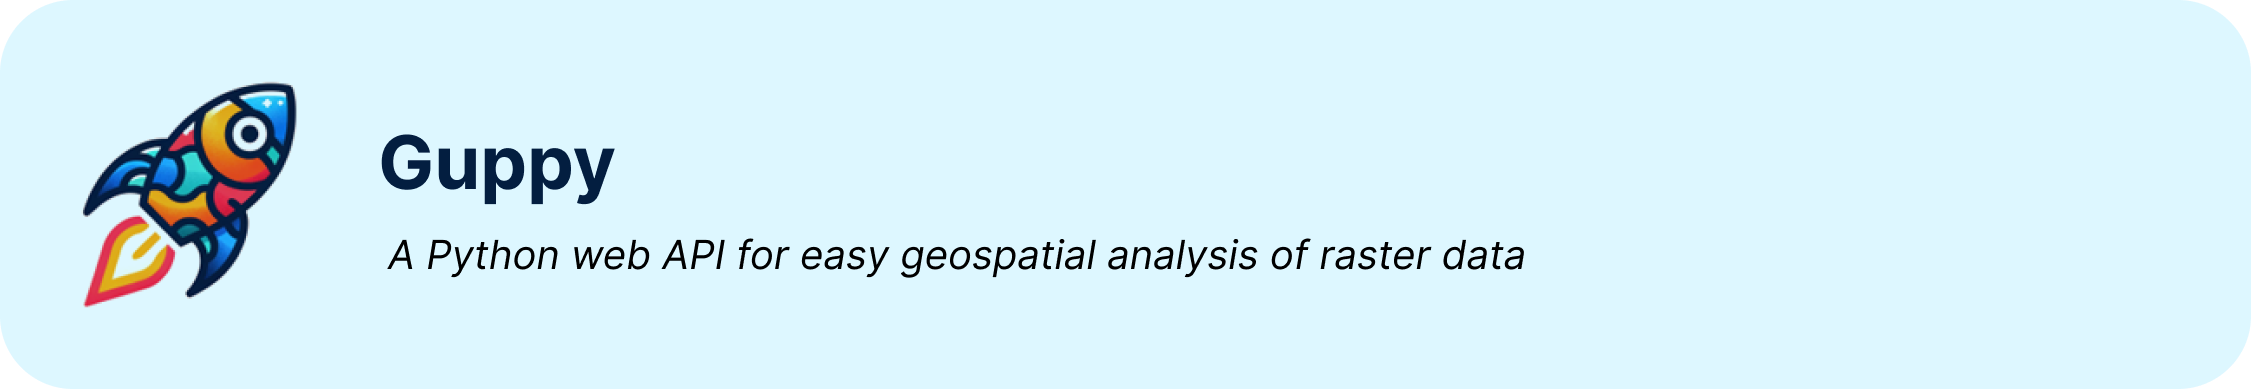 Guppy, A Python web API for easy geospatial analysis of raster data